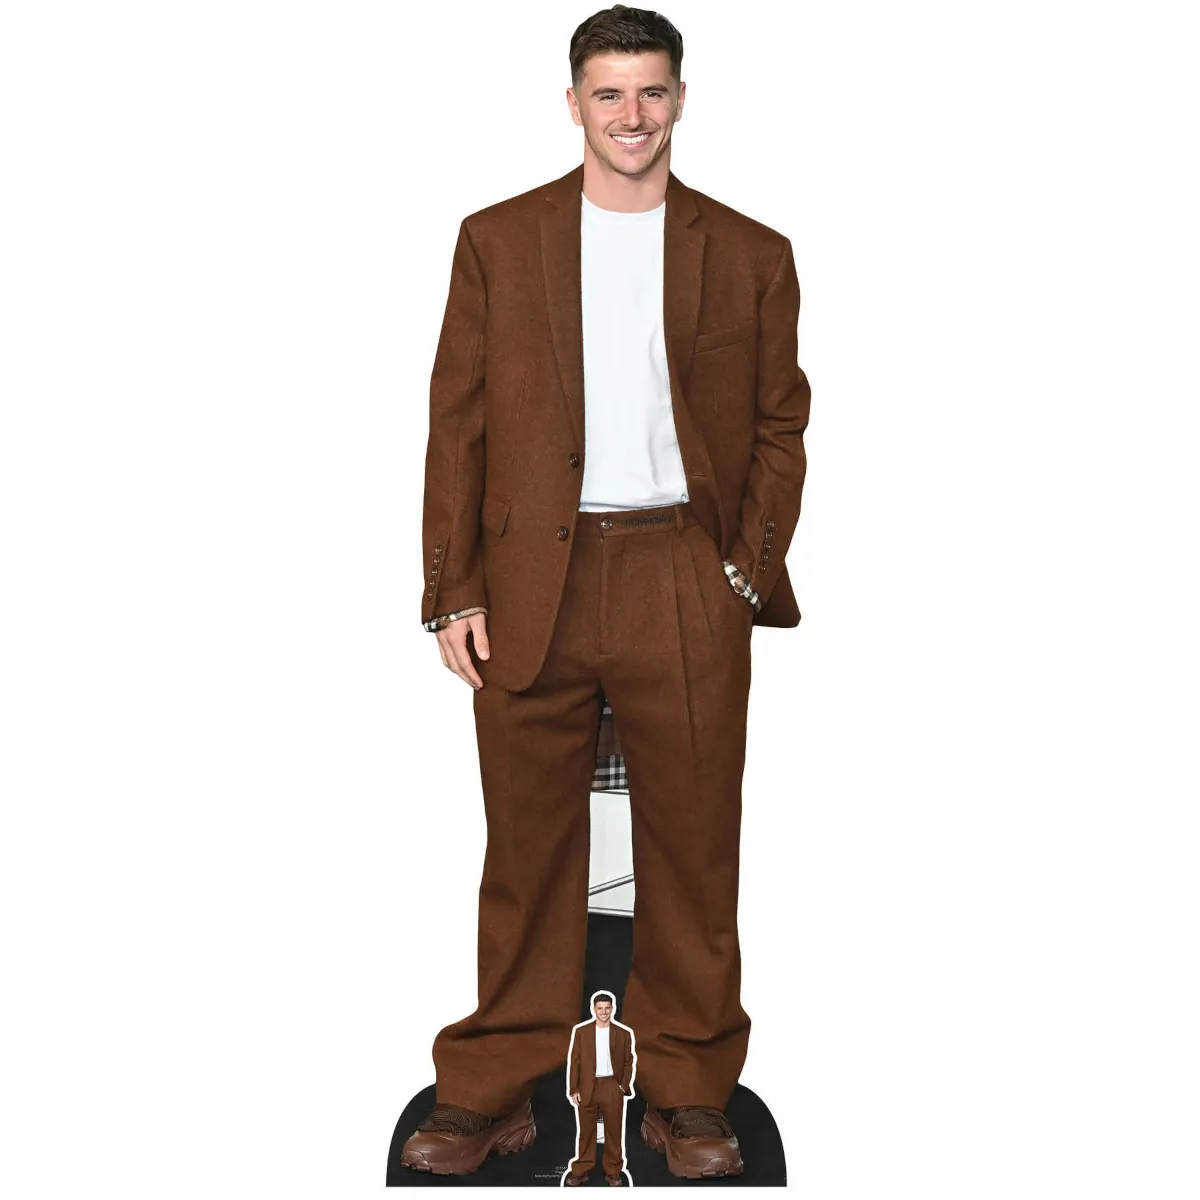 CS1047 Mason Mount 'Brown Suit' (English Footballer) Lifesize + Mini Cardboard Cutout Standee Front